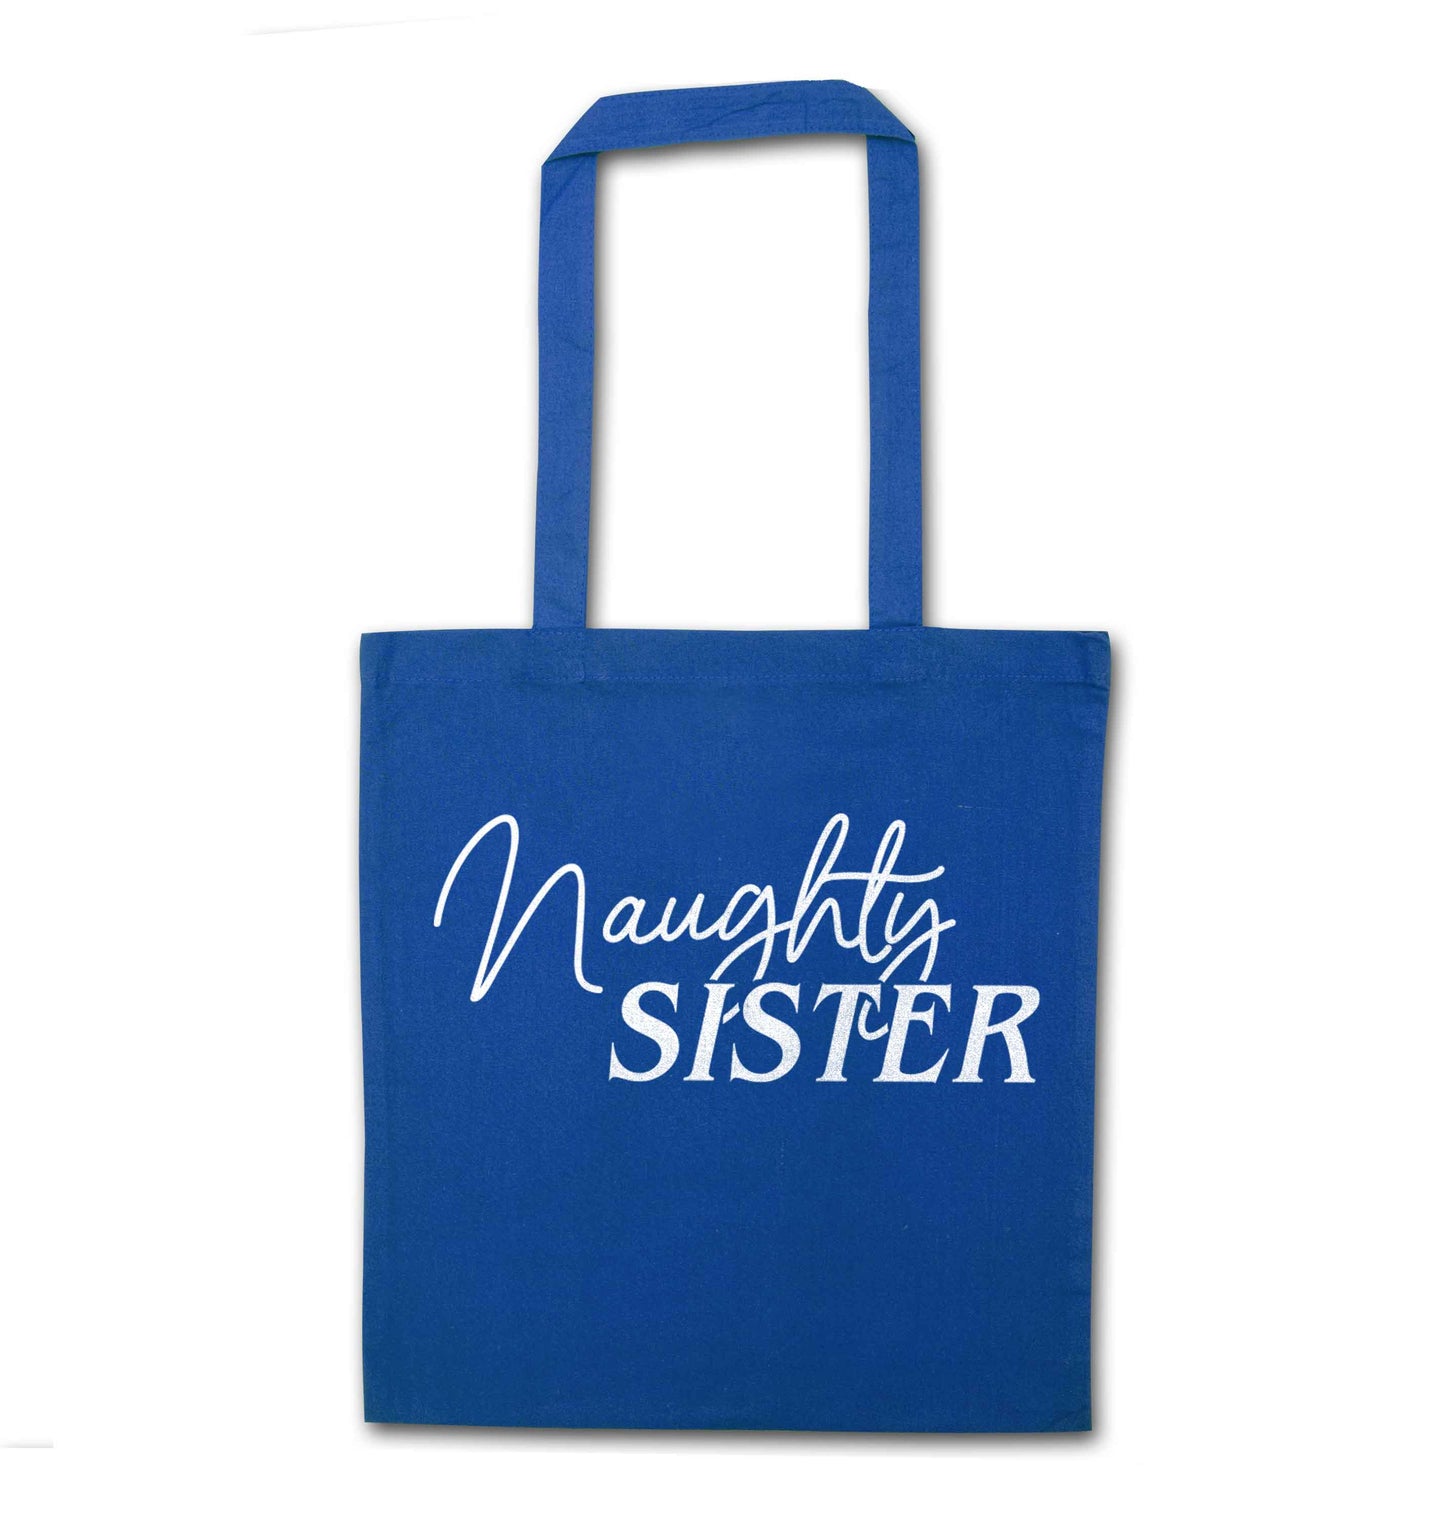 Naughty Sister blue tote bag